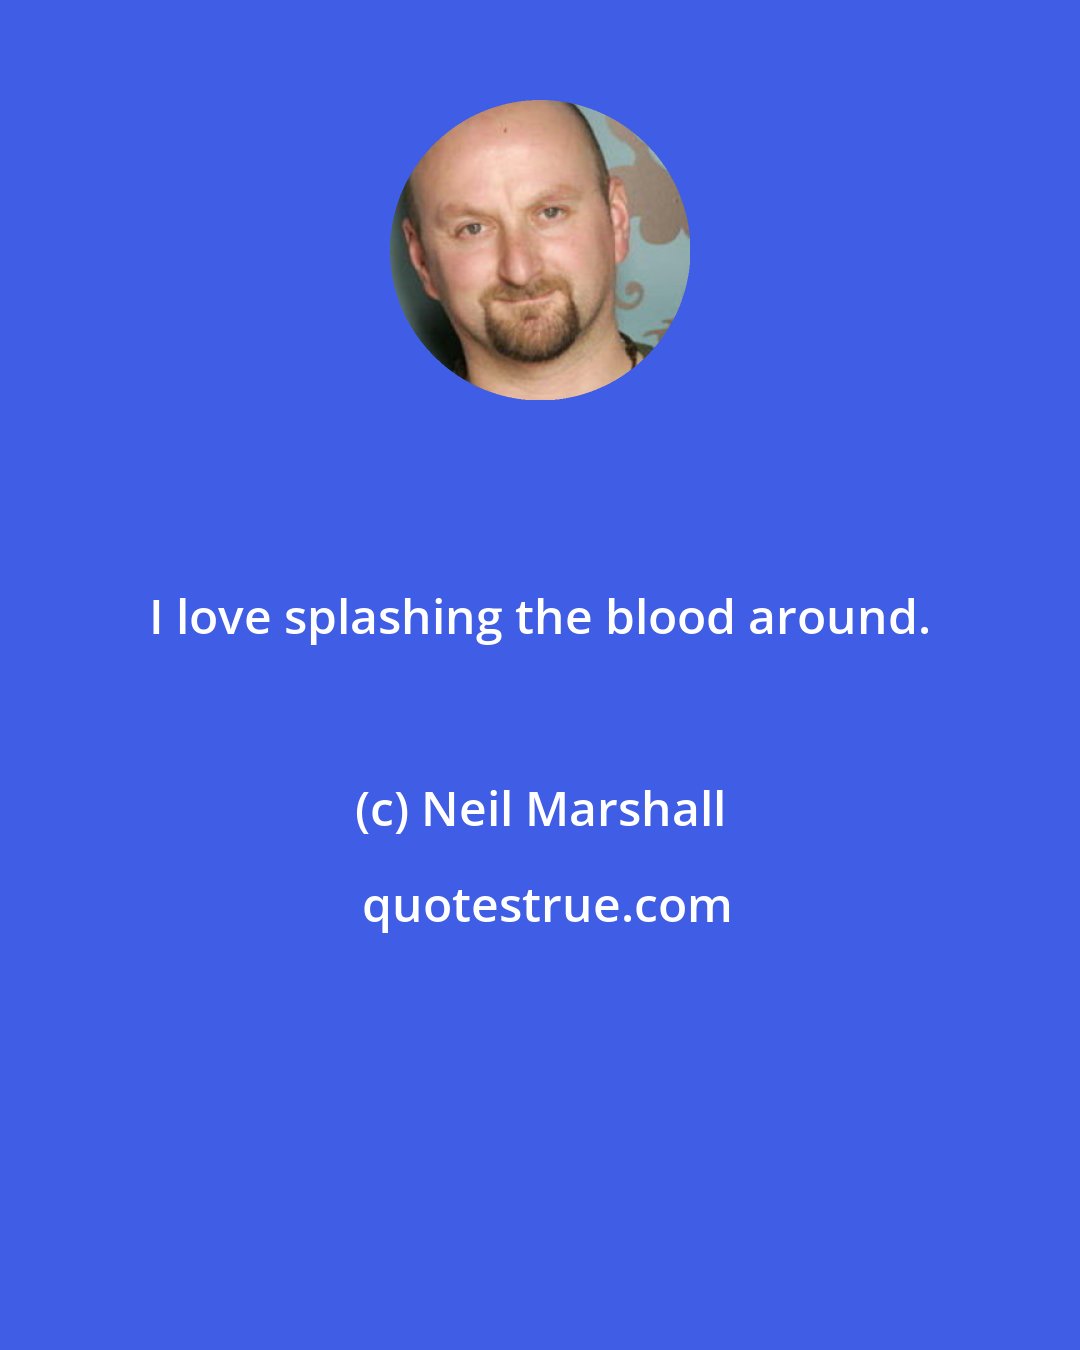 Neil Marshall: I love splashing the blood around.